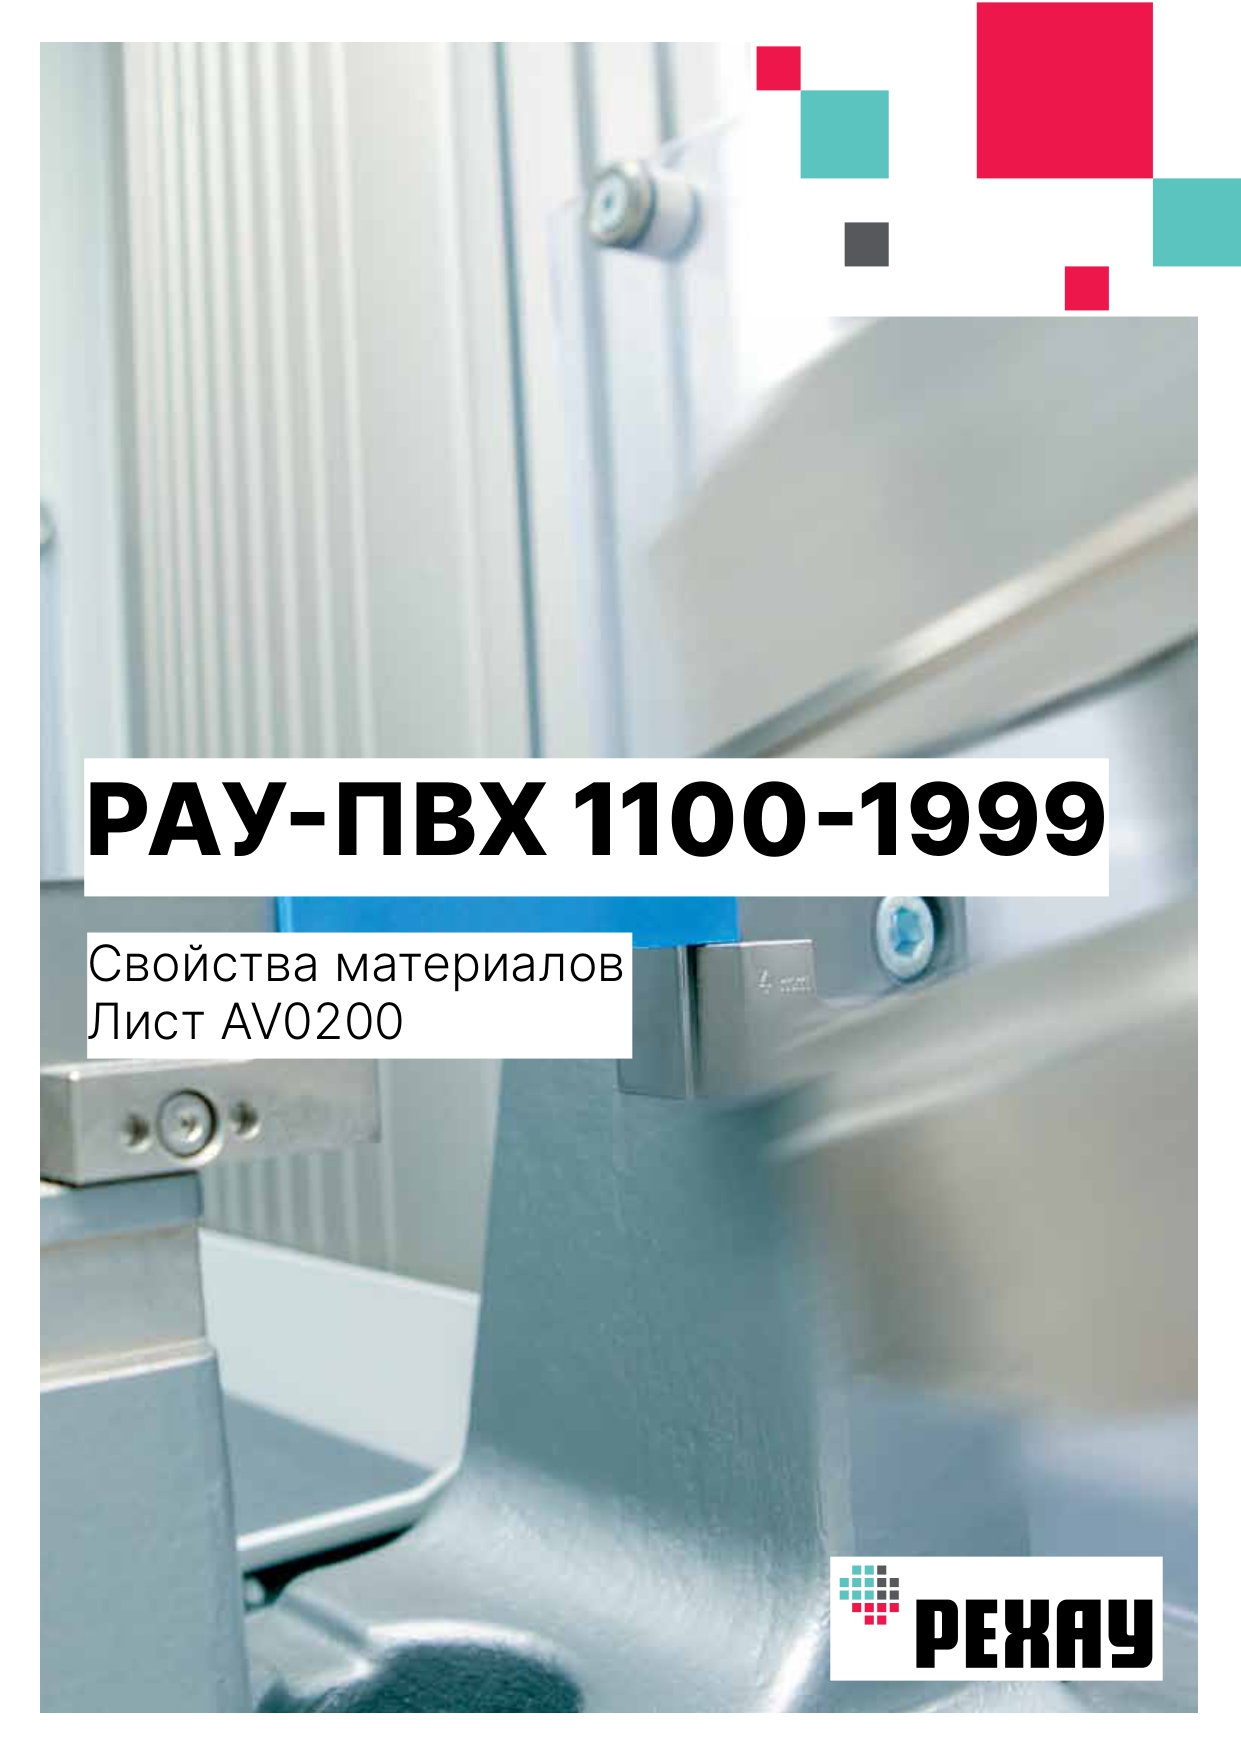 РАУ-ПВХ 1100-1999